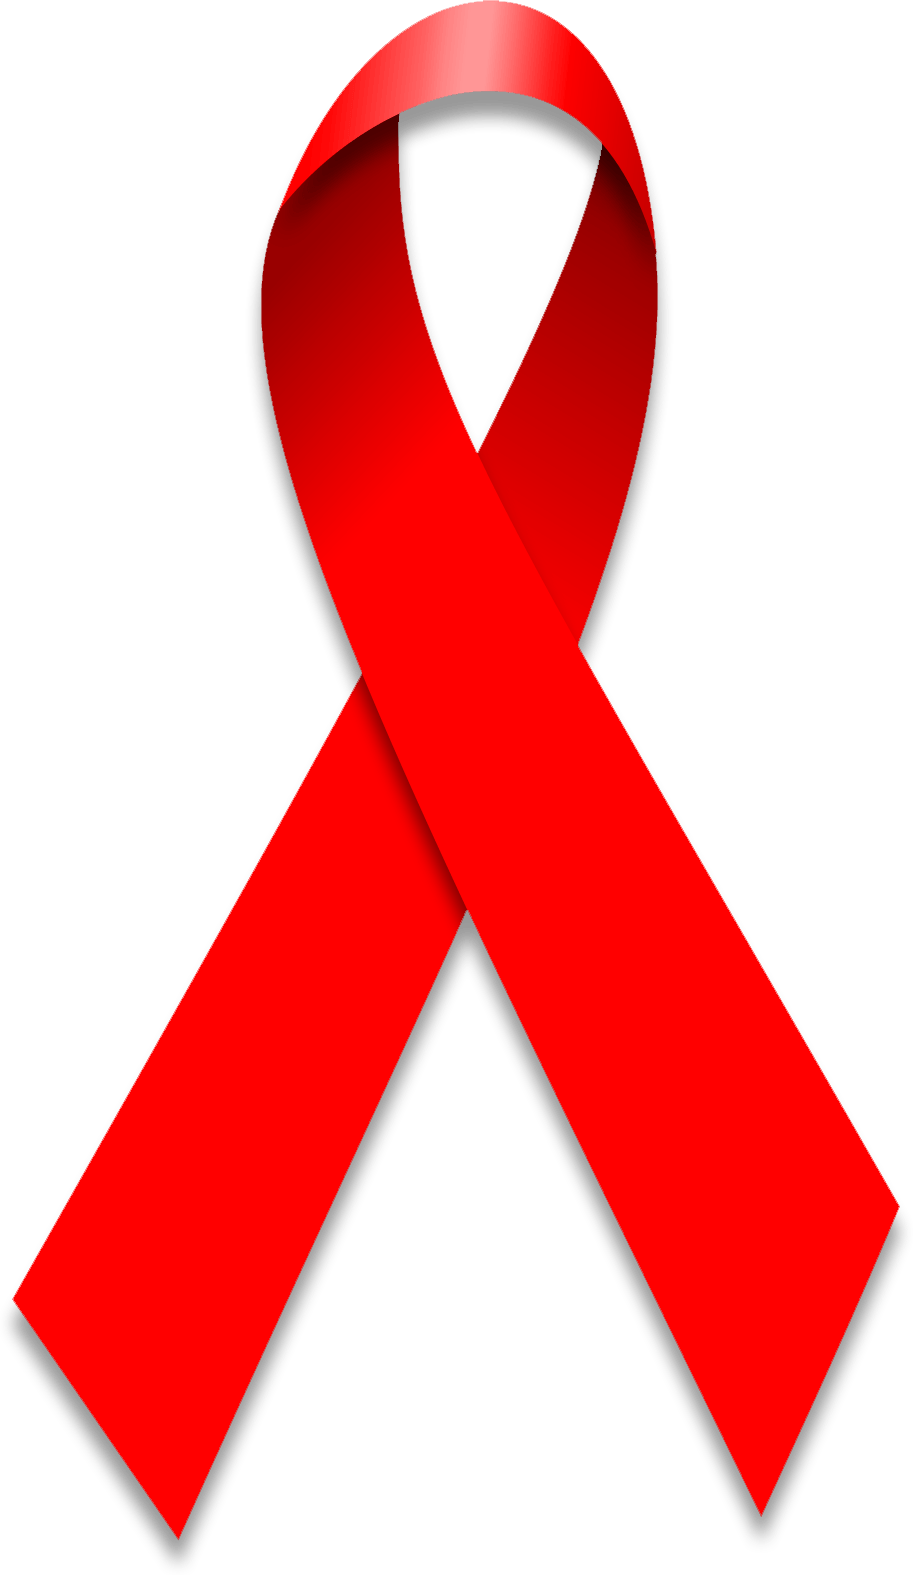 HIV Logo - File:World Aids Day Ribbon.png - Wikimedia Commons